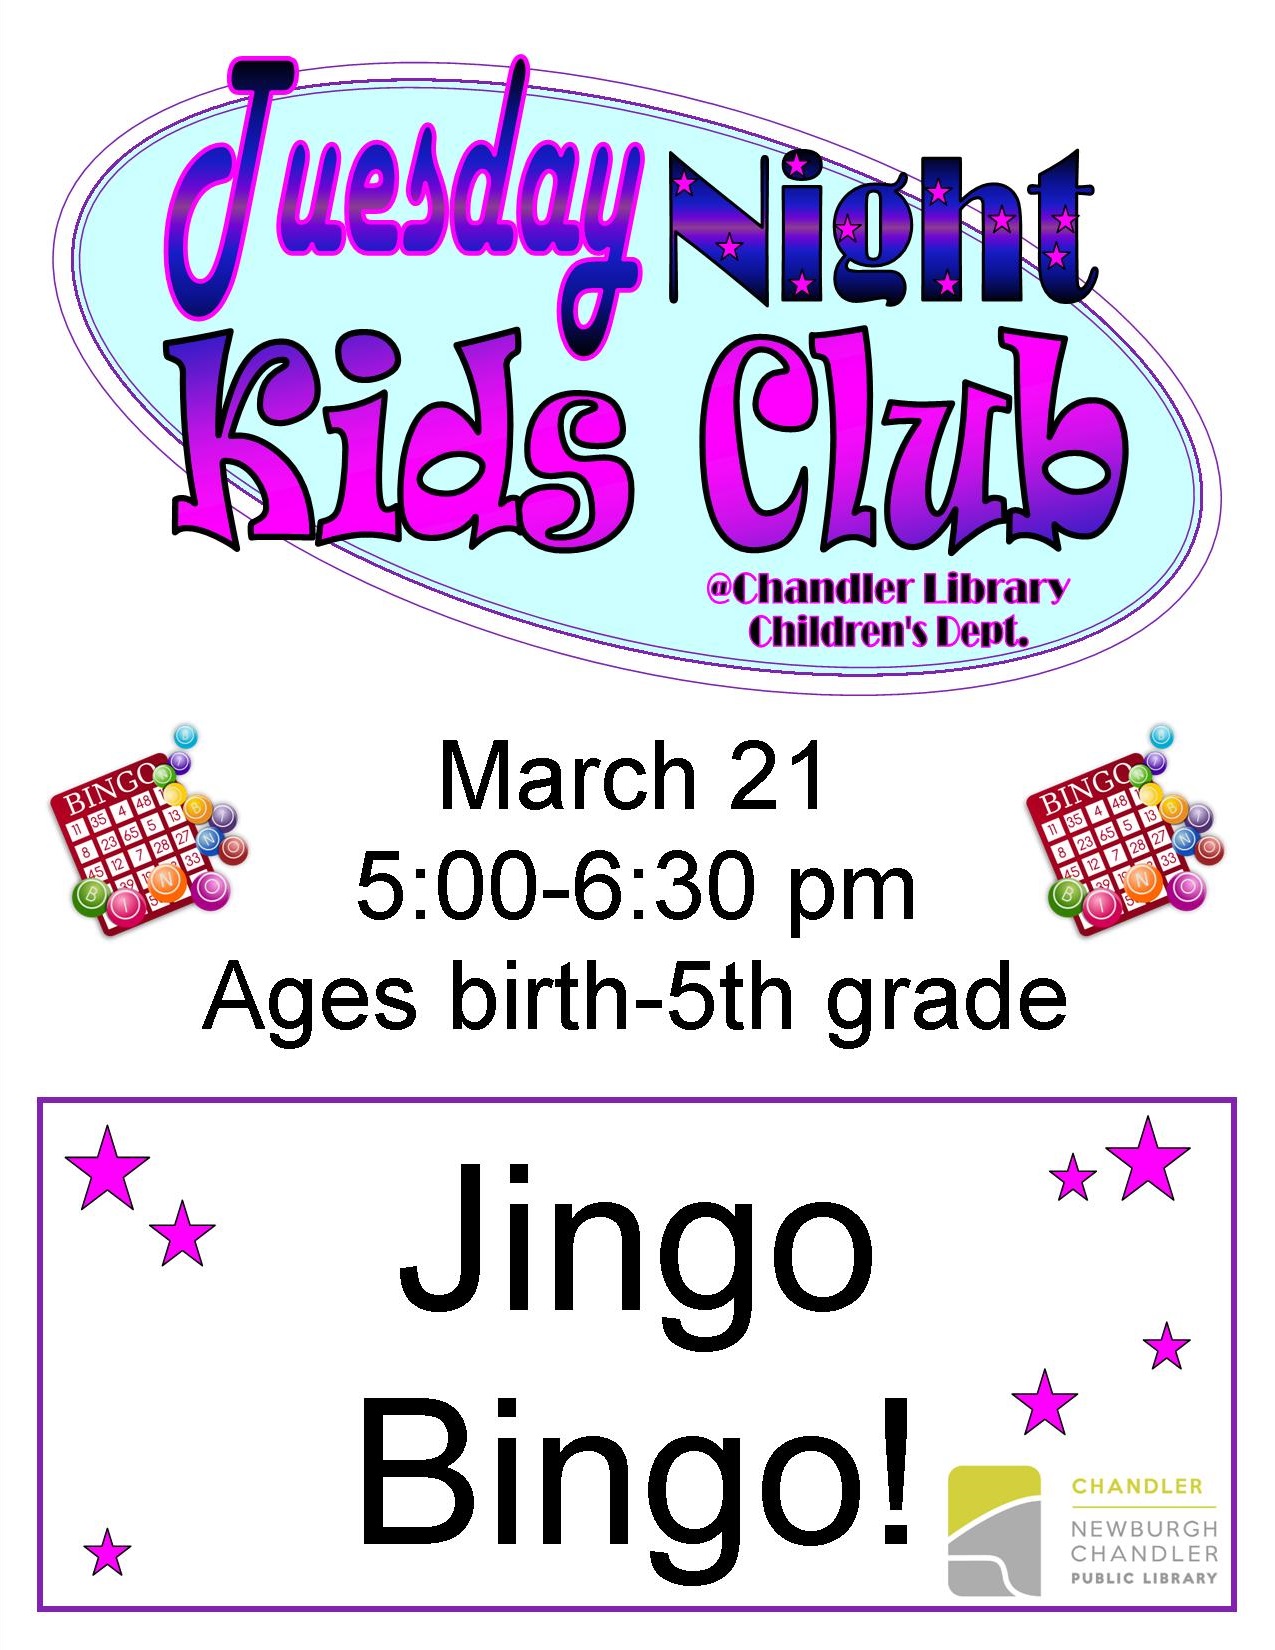 Tuesday Night Kids Club: Jingo Bingo @ Chandler Library Children's Department | Chandler | Indiana | United States